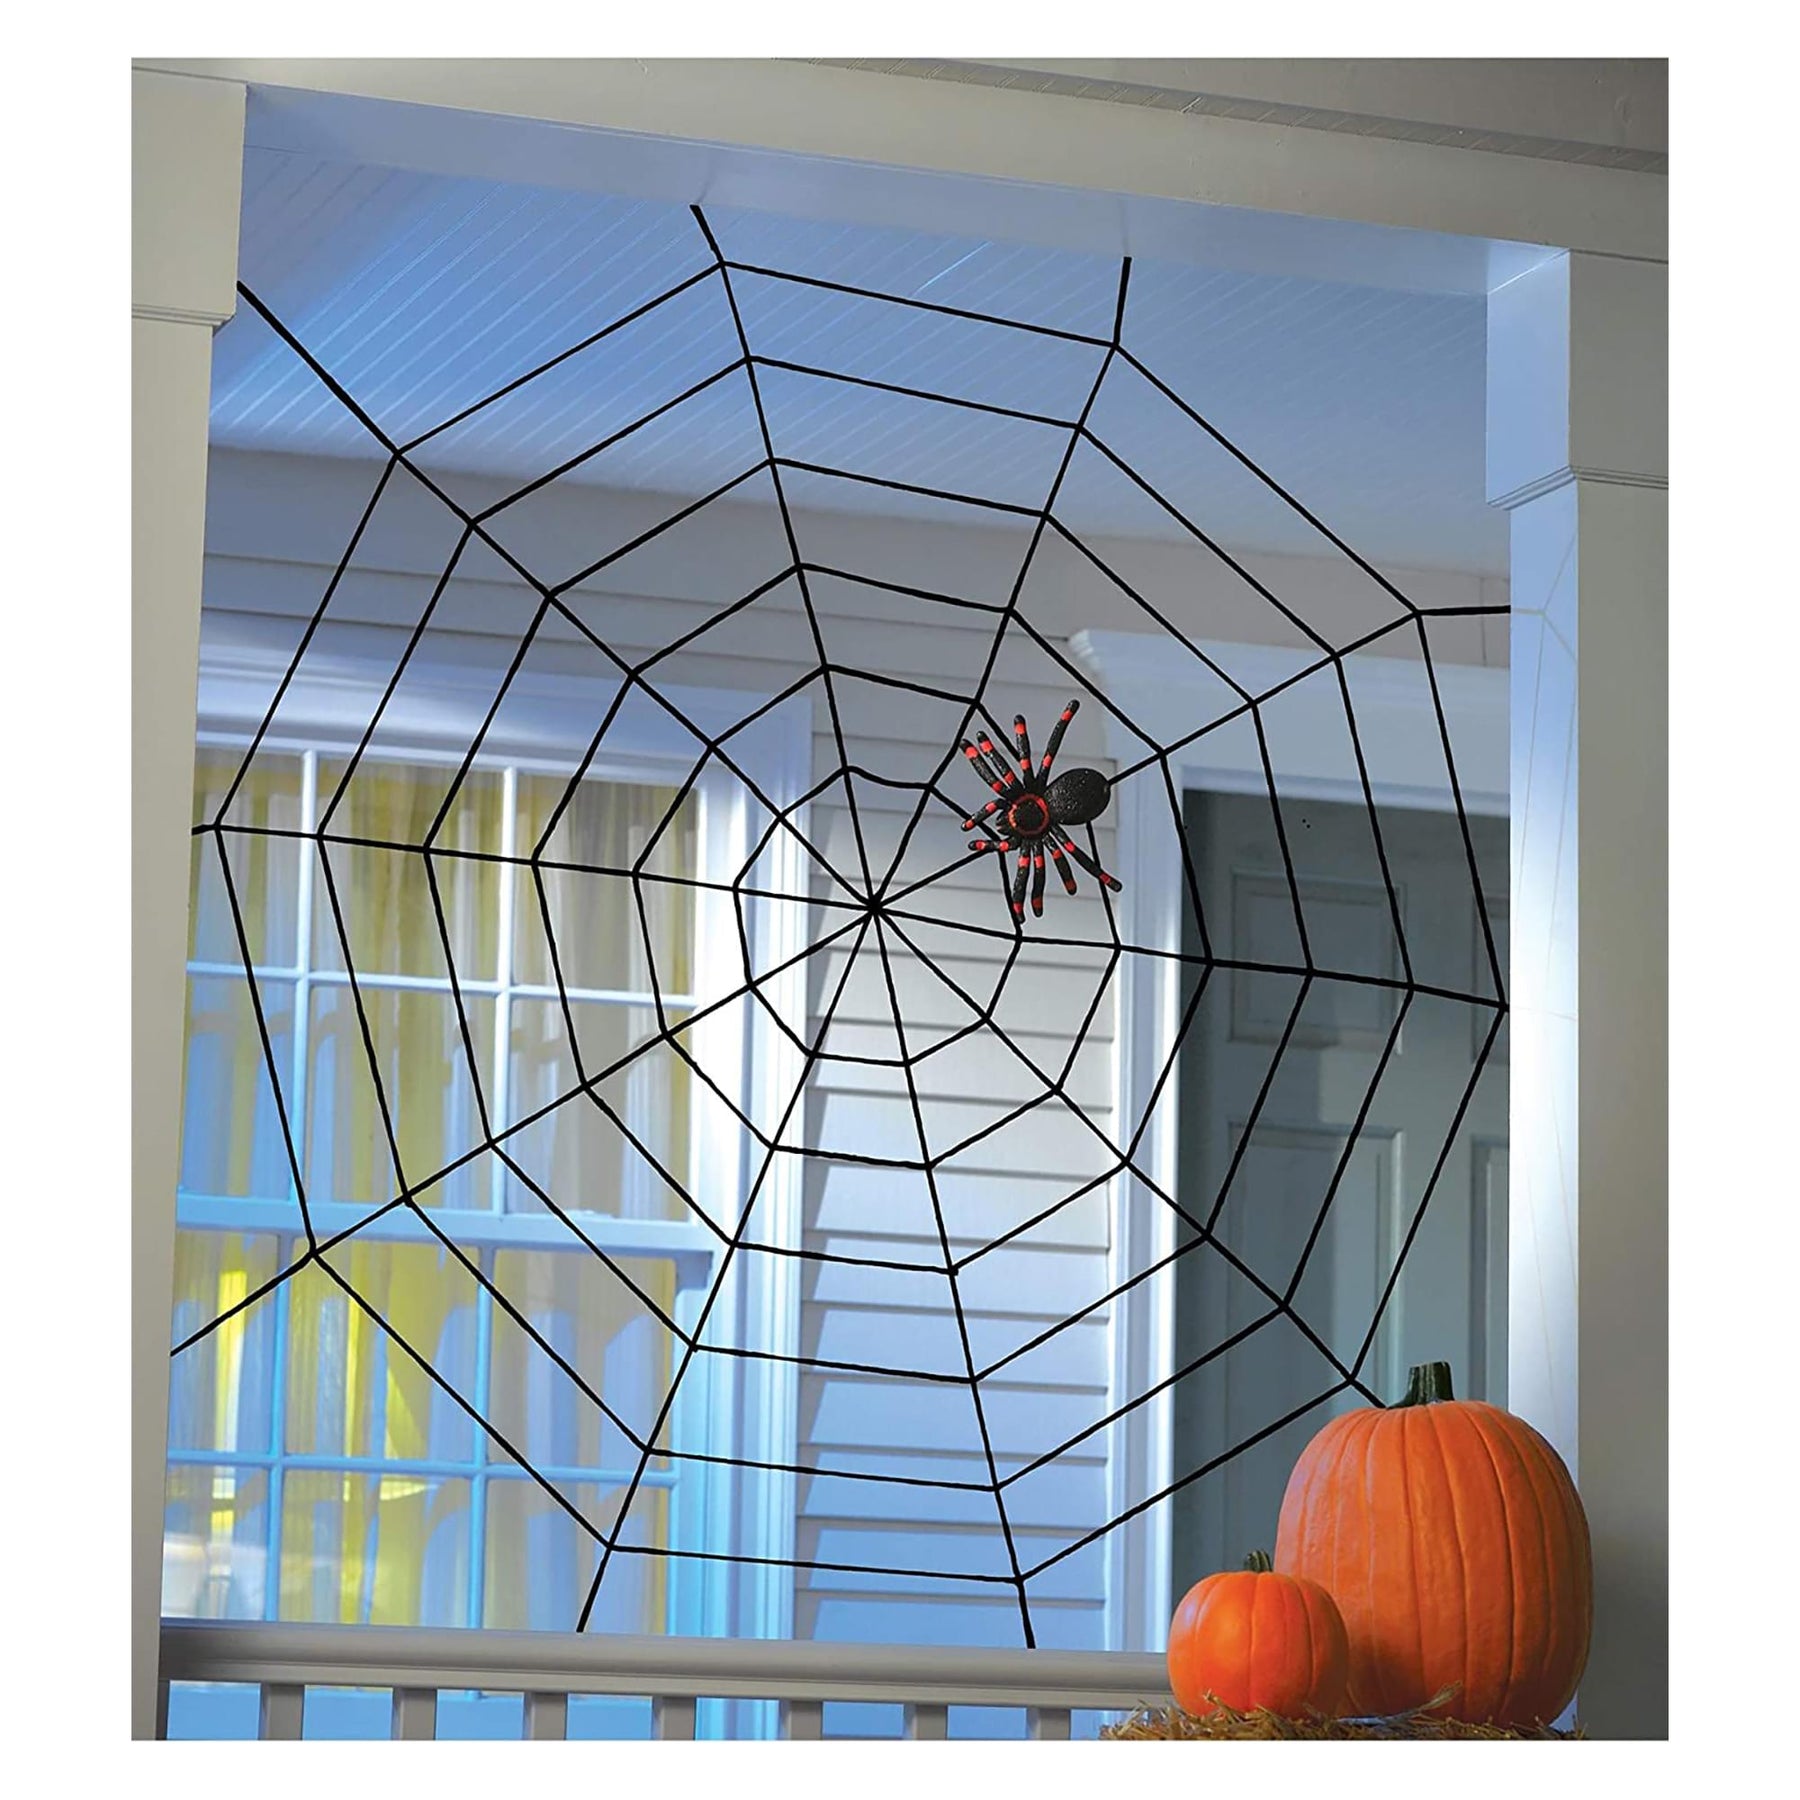 5 Foot Rope Spider Web Halloween Decoration